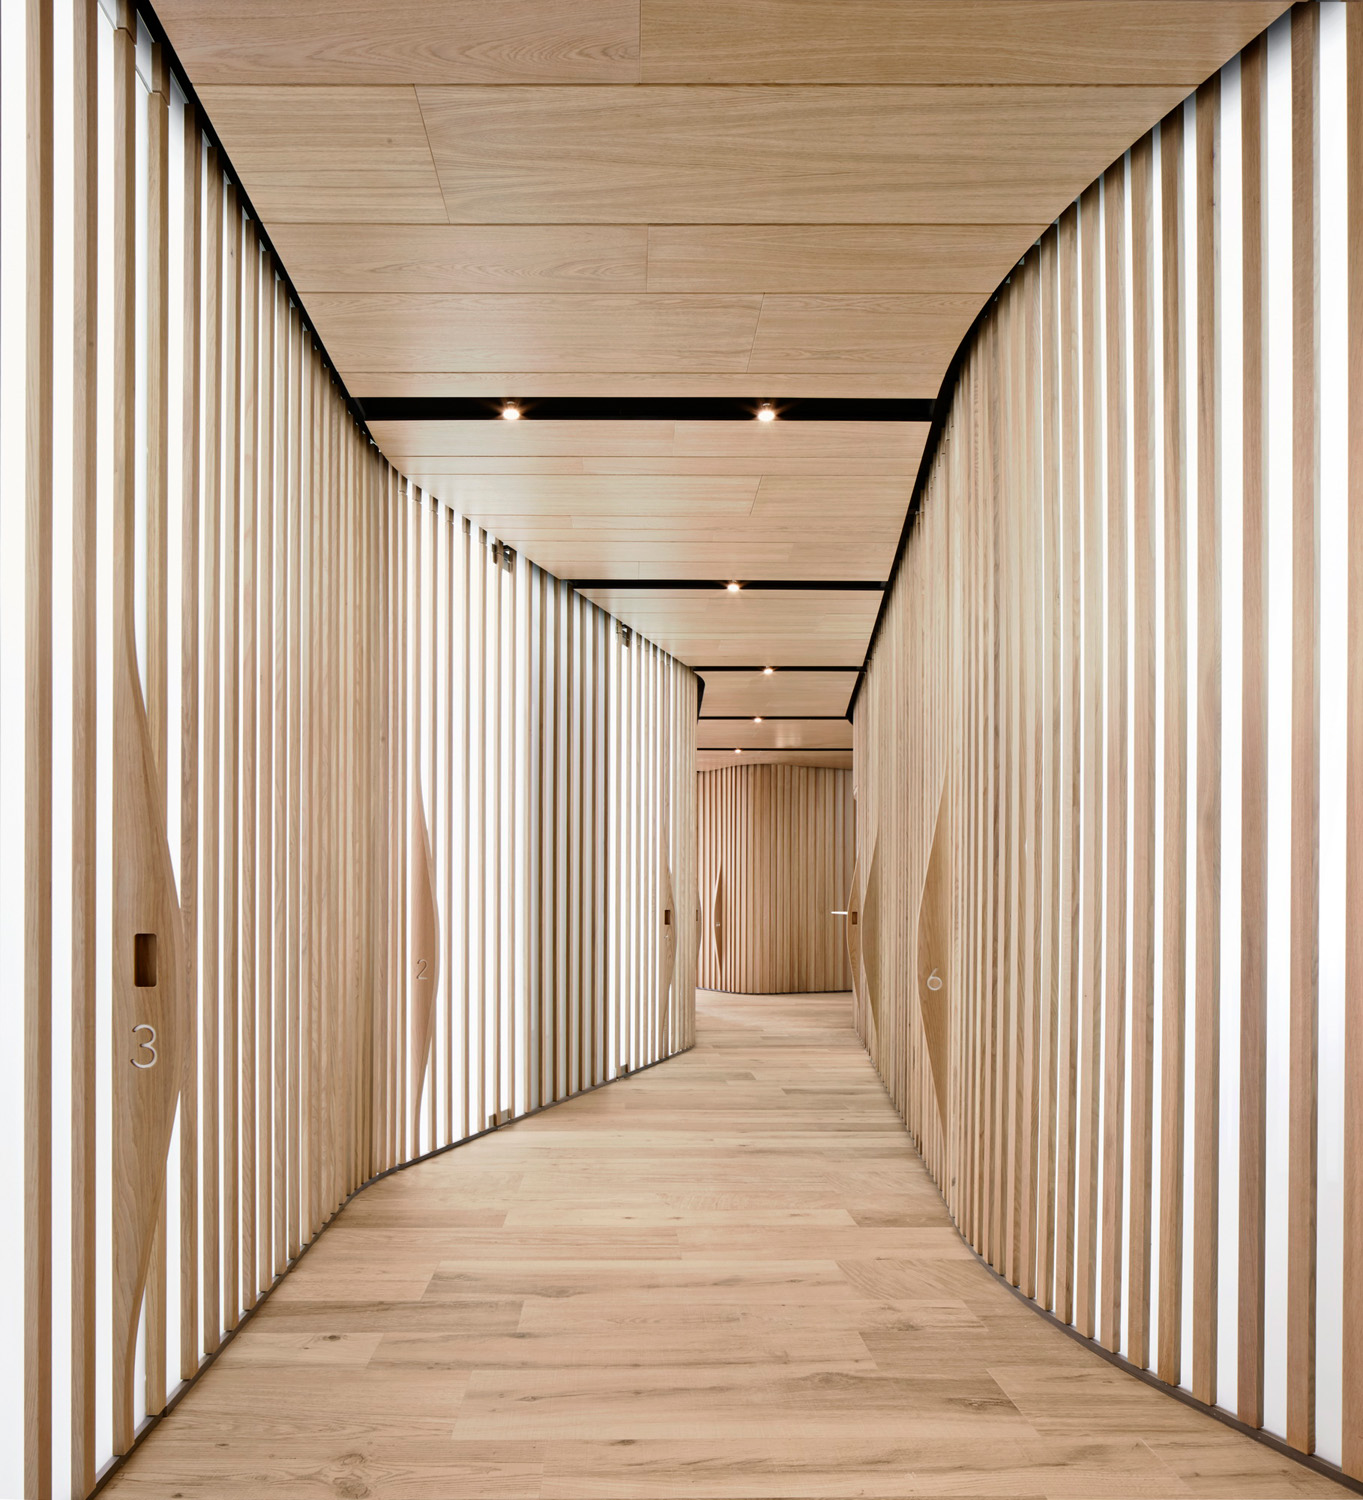 Corridor with wooden beams by OHLAB - luxury contemporary architecture and interior design studio in Ibiza